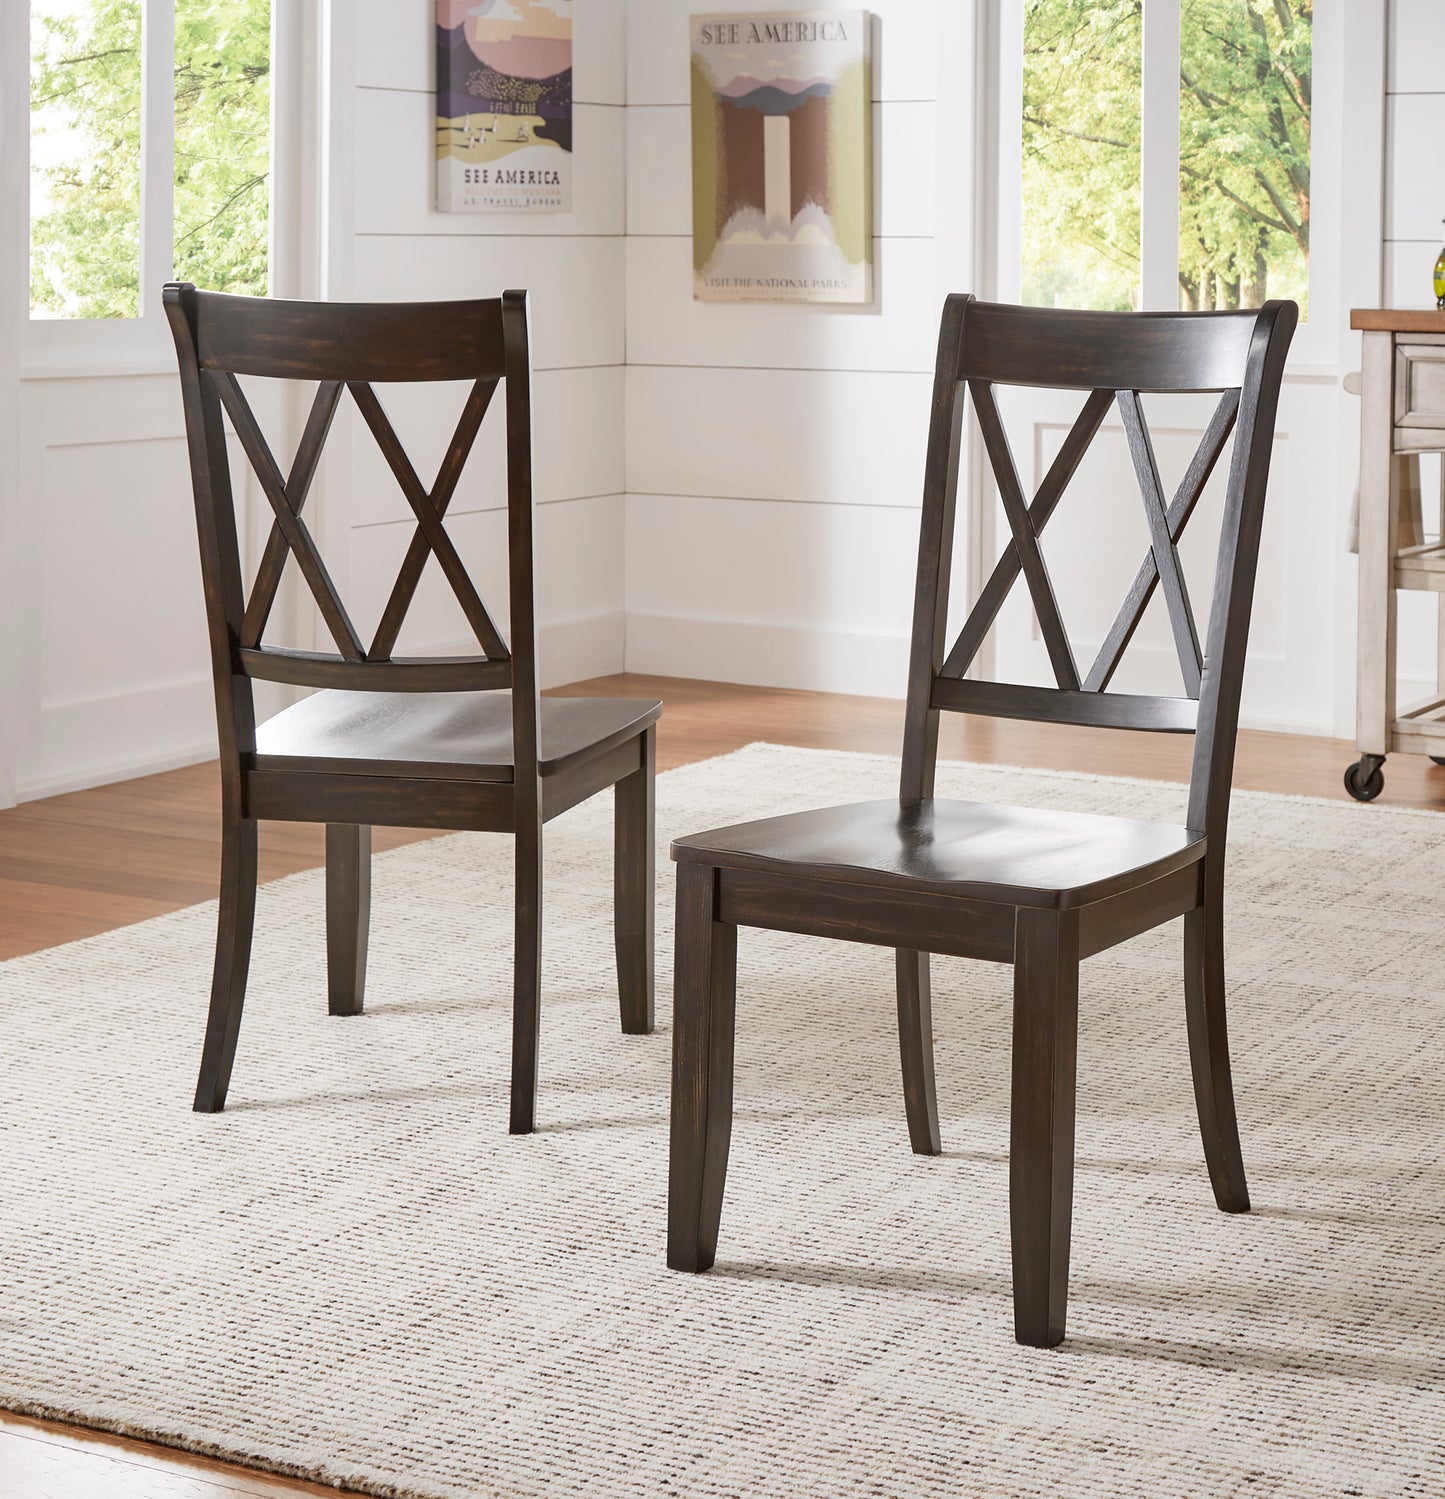 Oak Finish Oval 5-Piece Dining Set - Black Finish Chairs